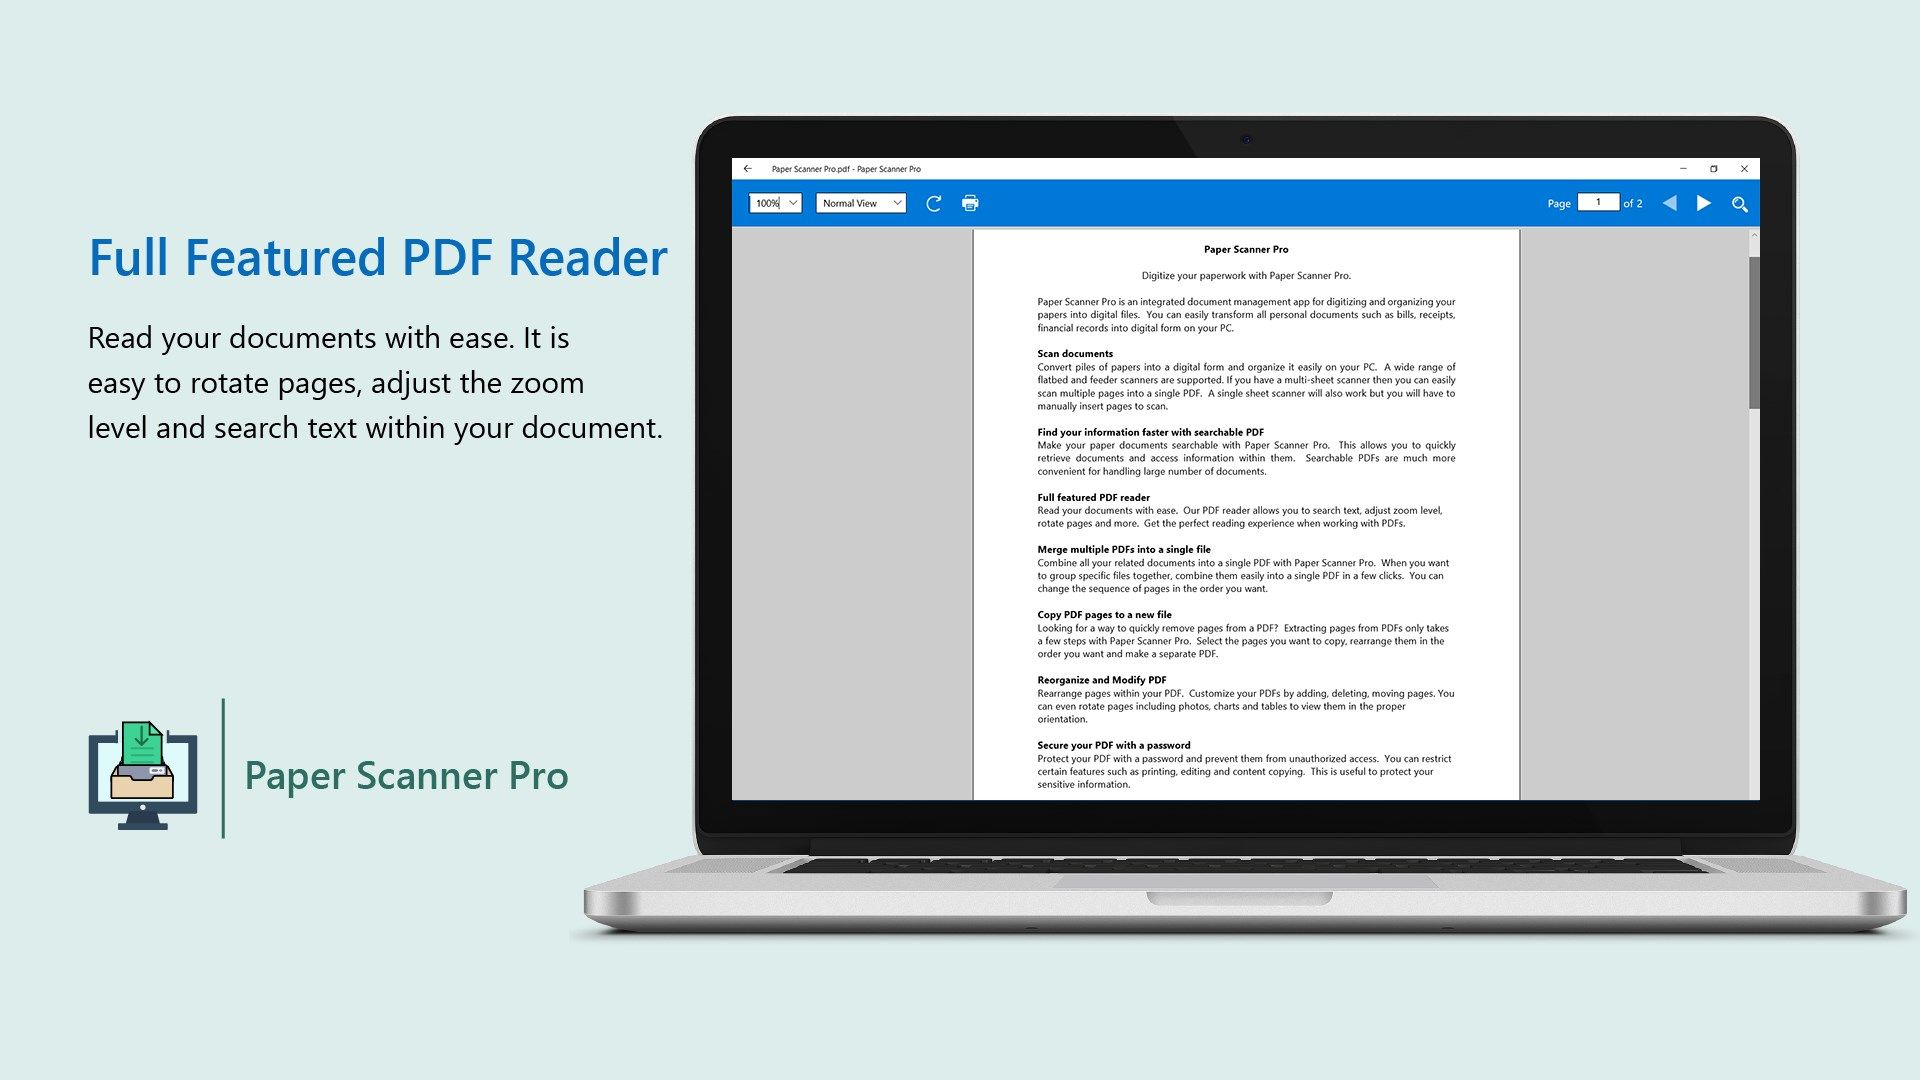 Full featured PDF reader